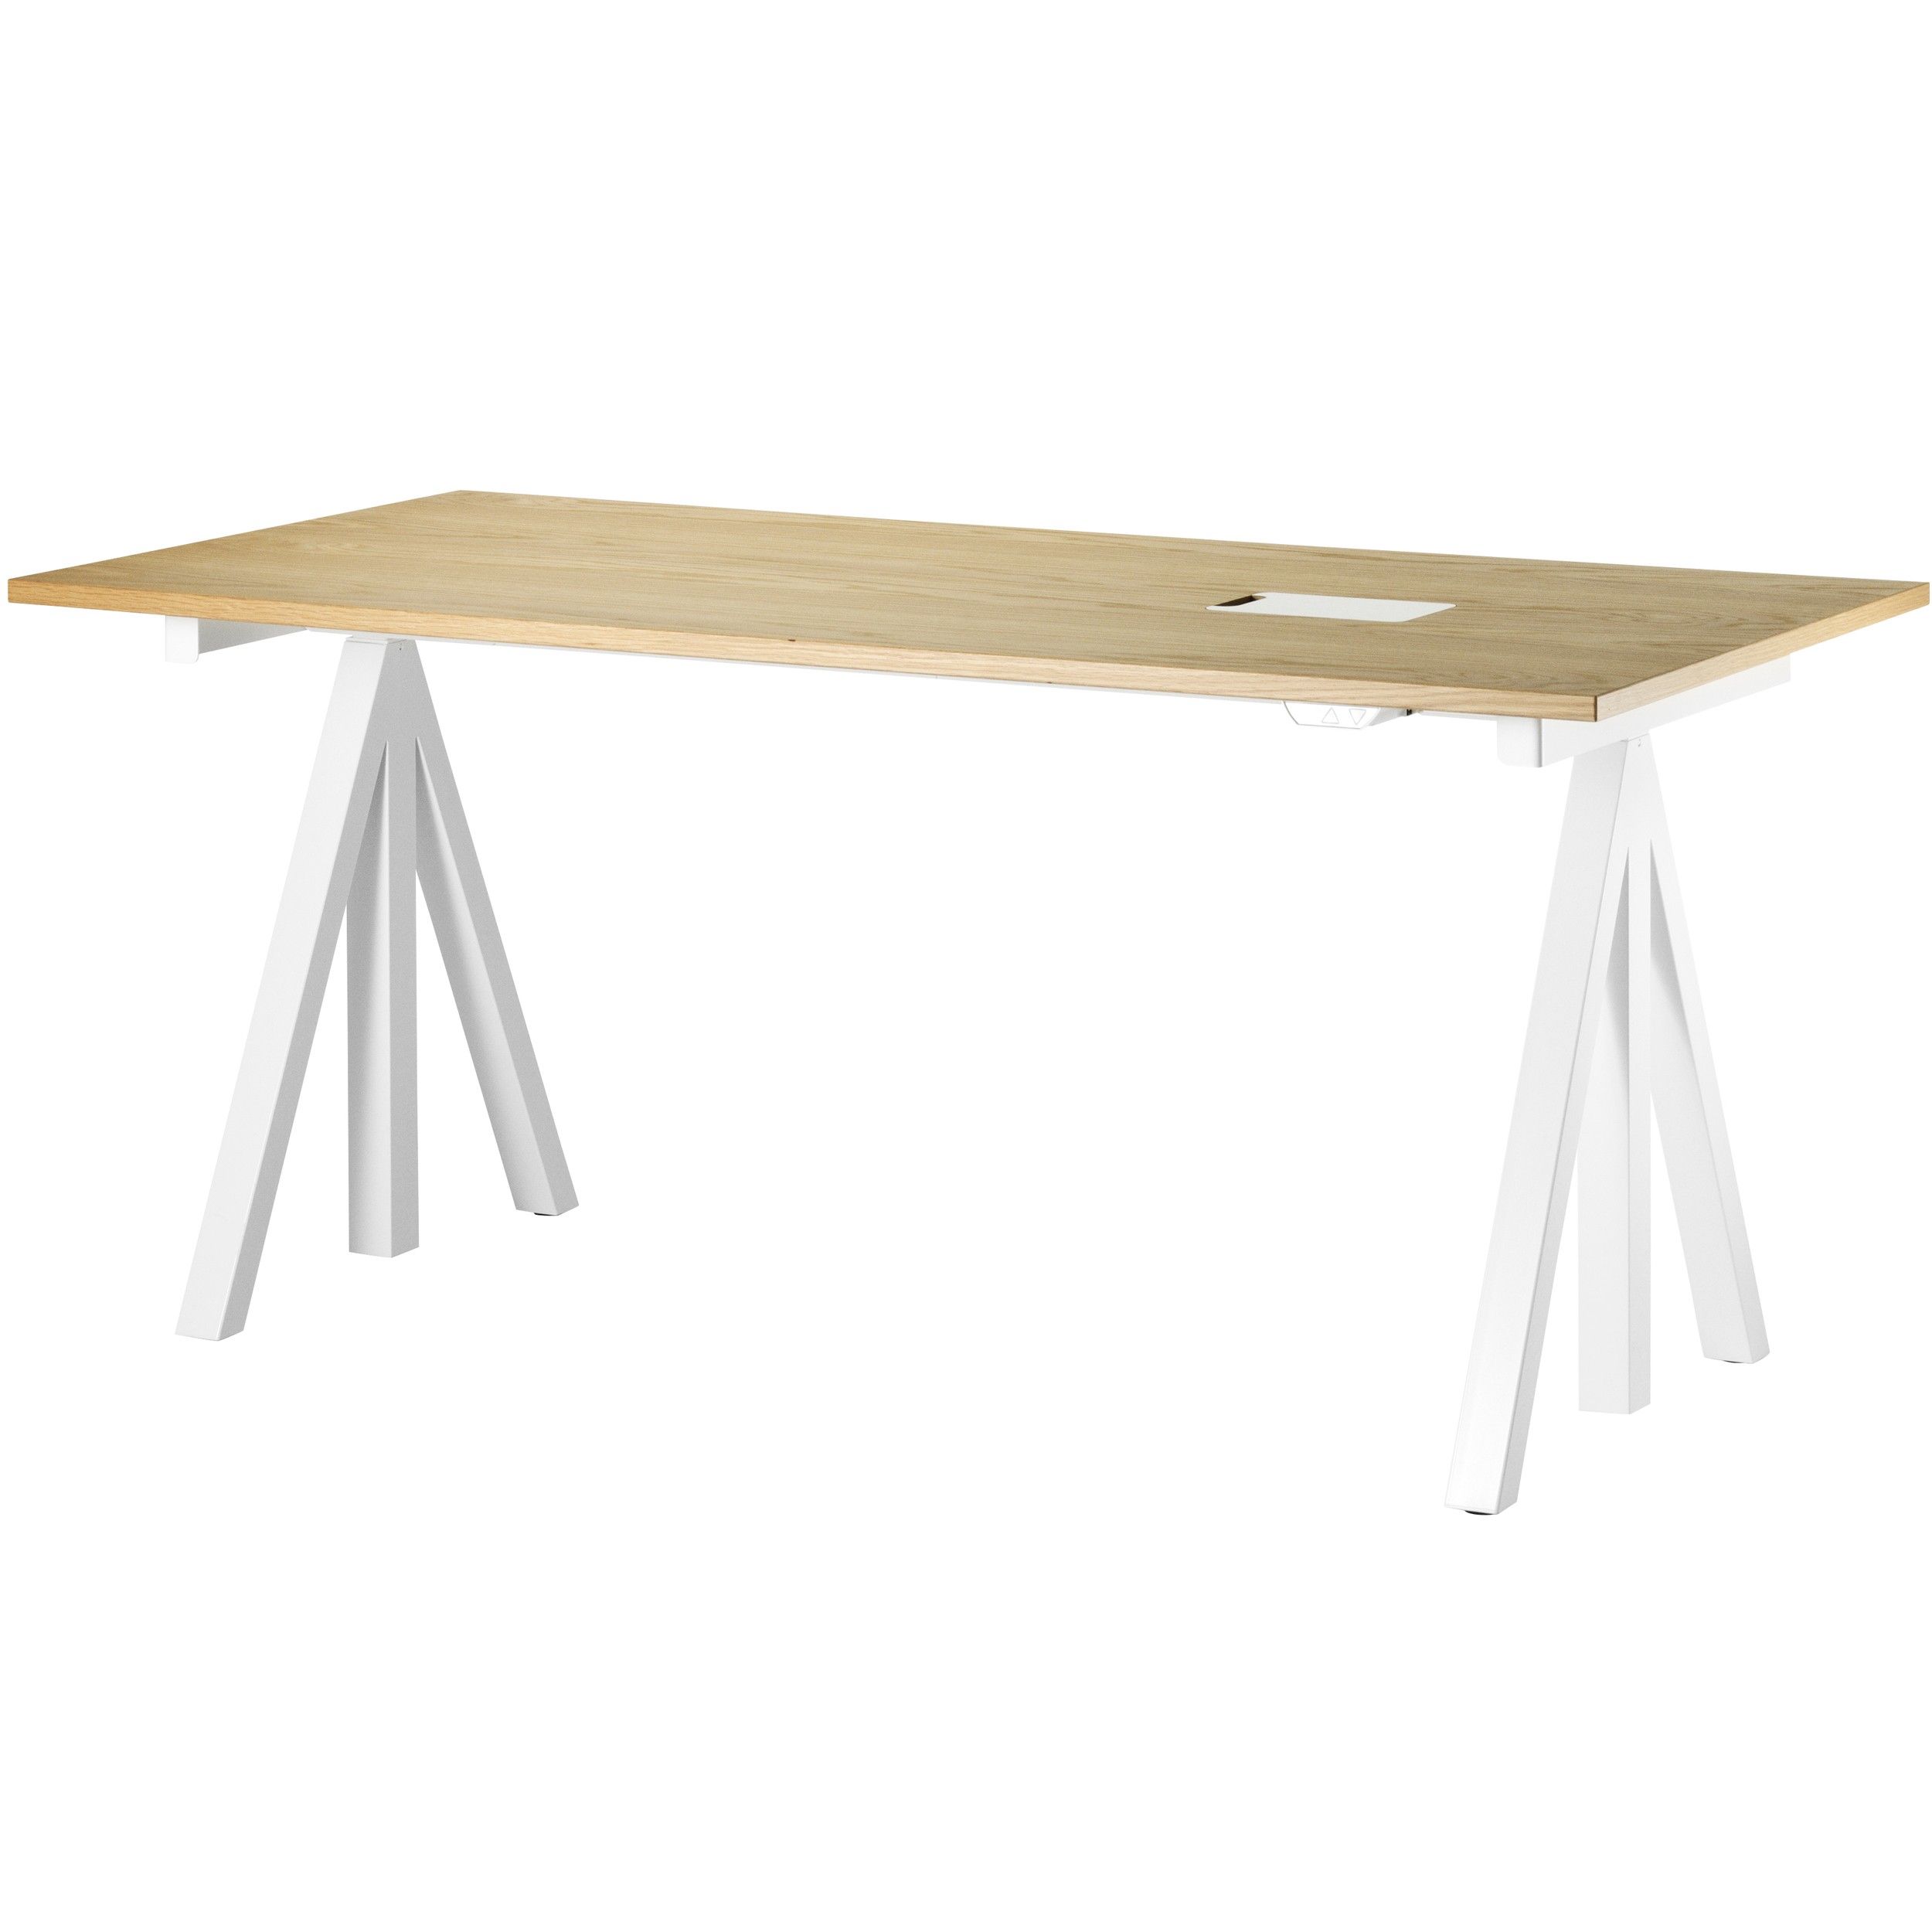 String Furniture Work Desk bureau 160 cm eiken | Flinders